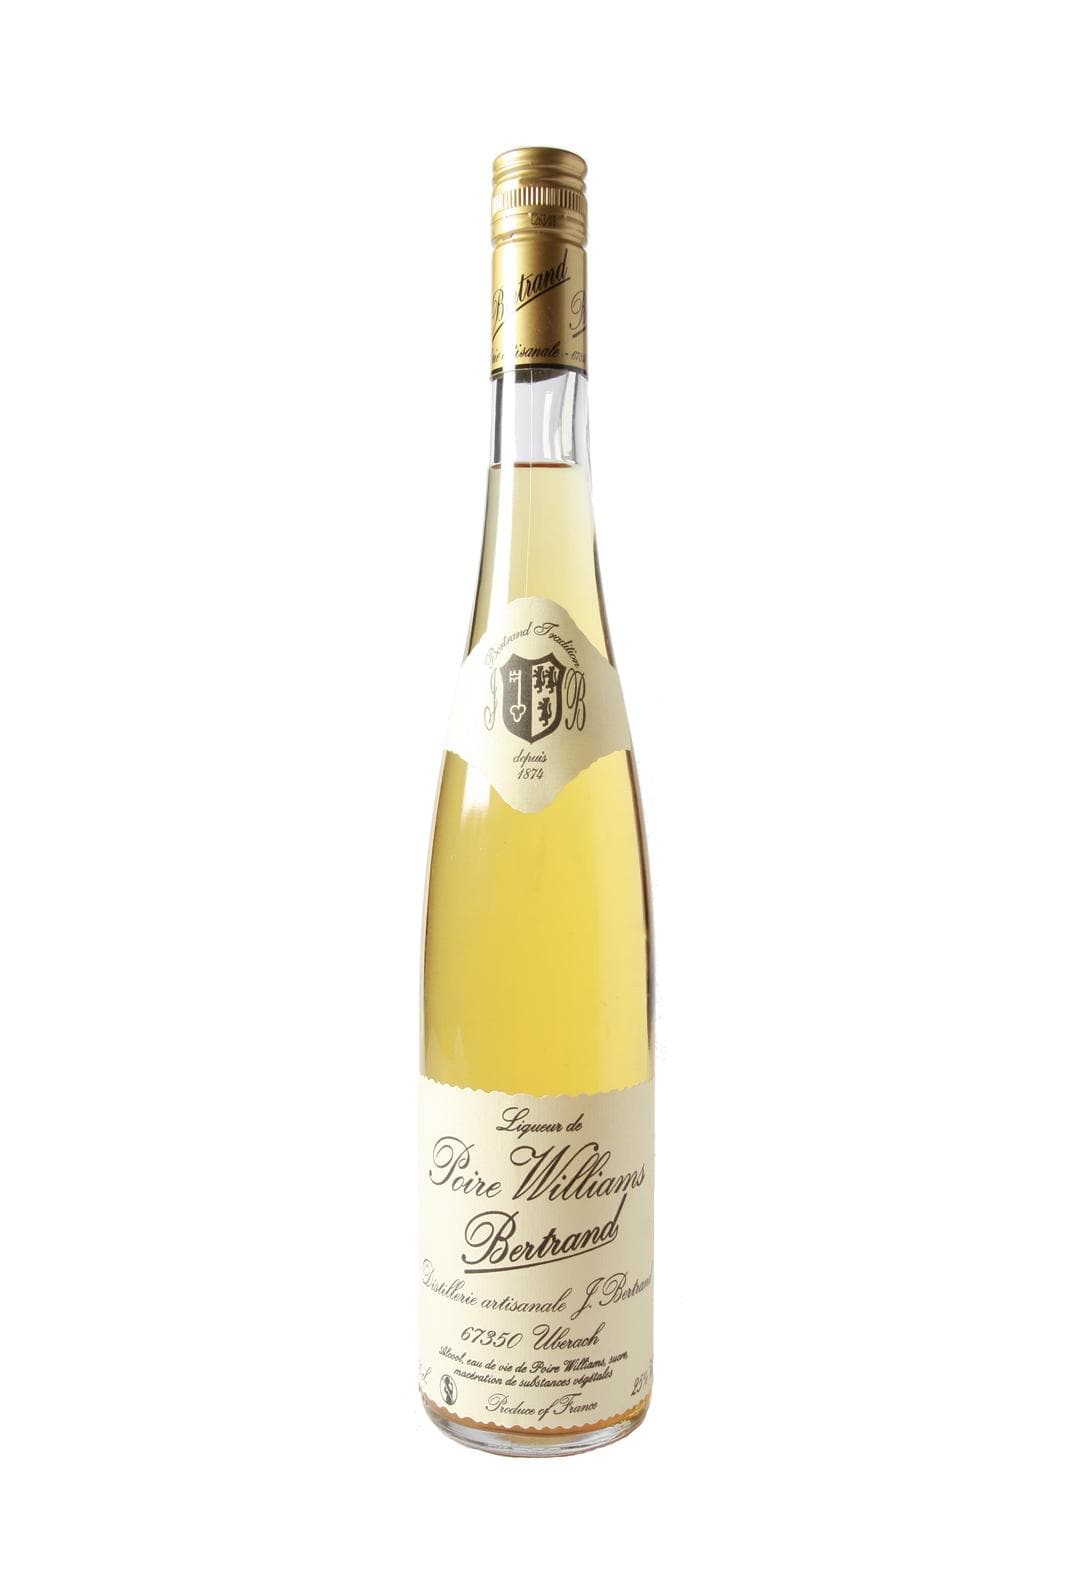 Bertrand Liqueur de Poire Williams (Williams Pear) 25% 700ml | Liqueurs | Shop online at Spirits of France